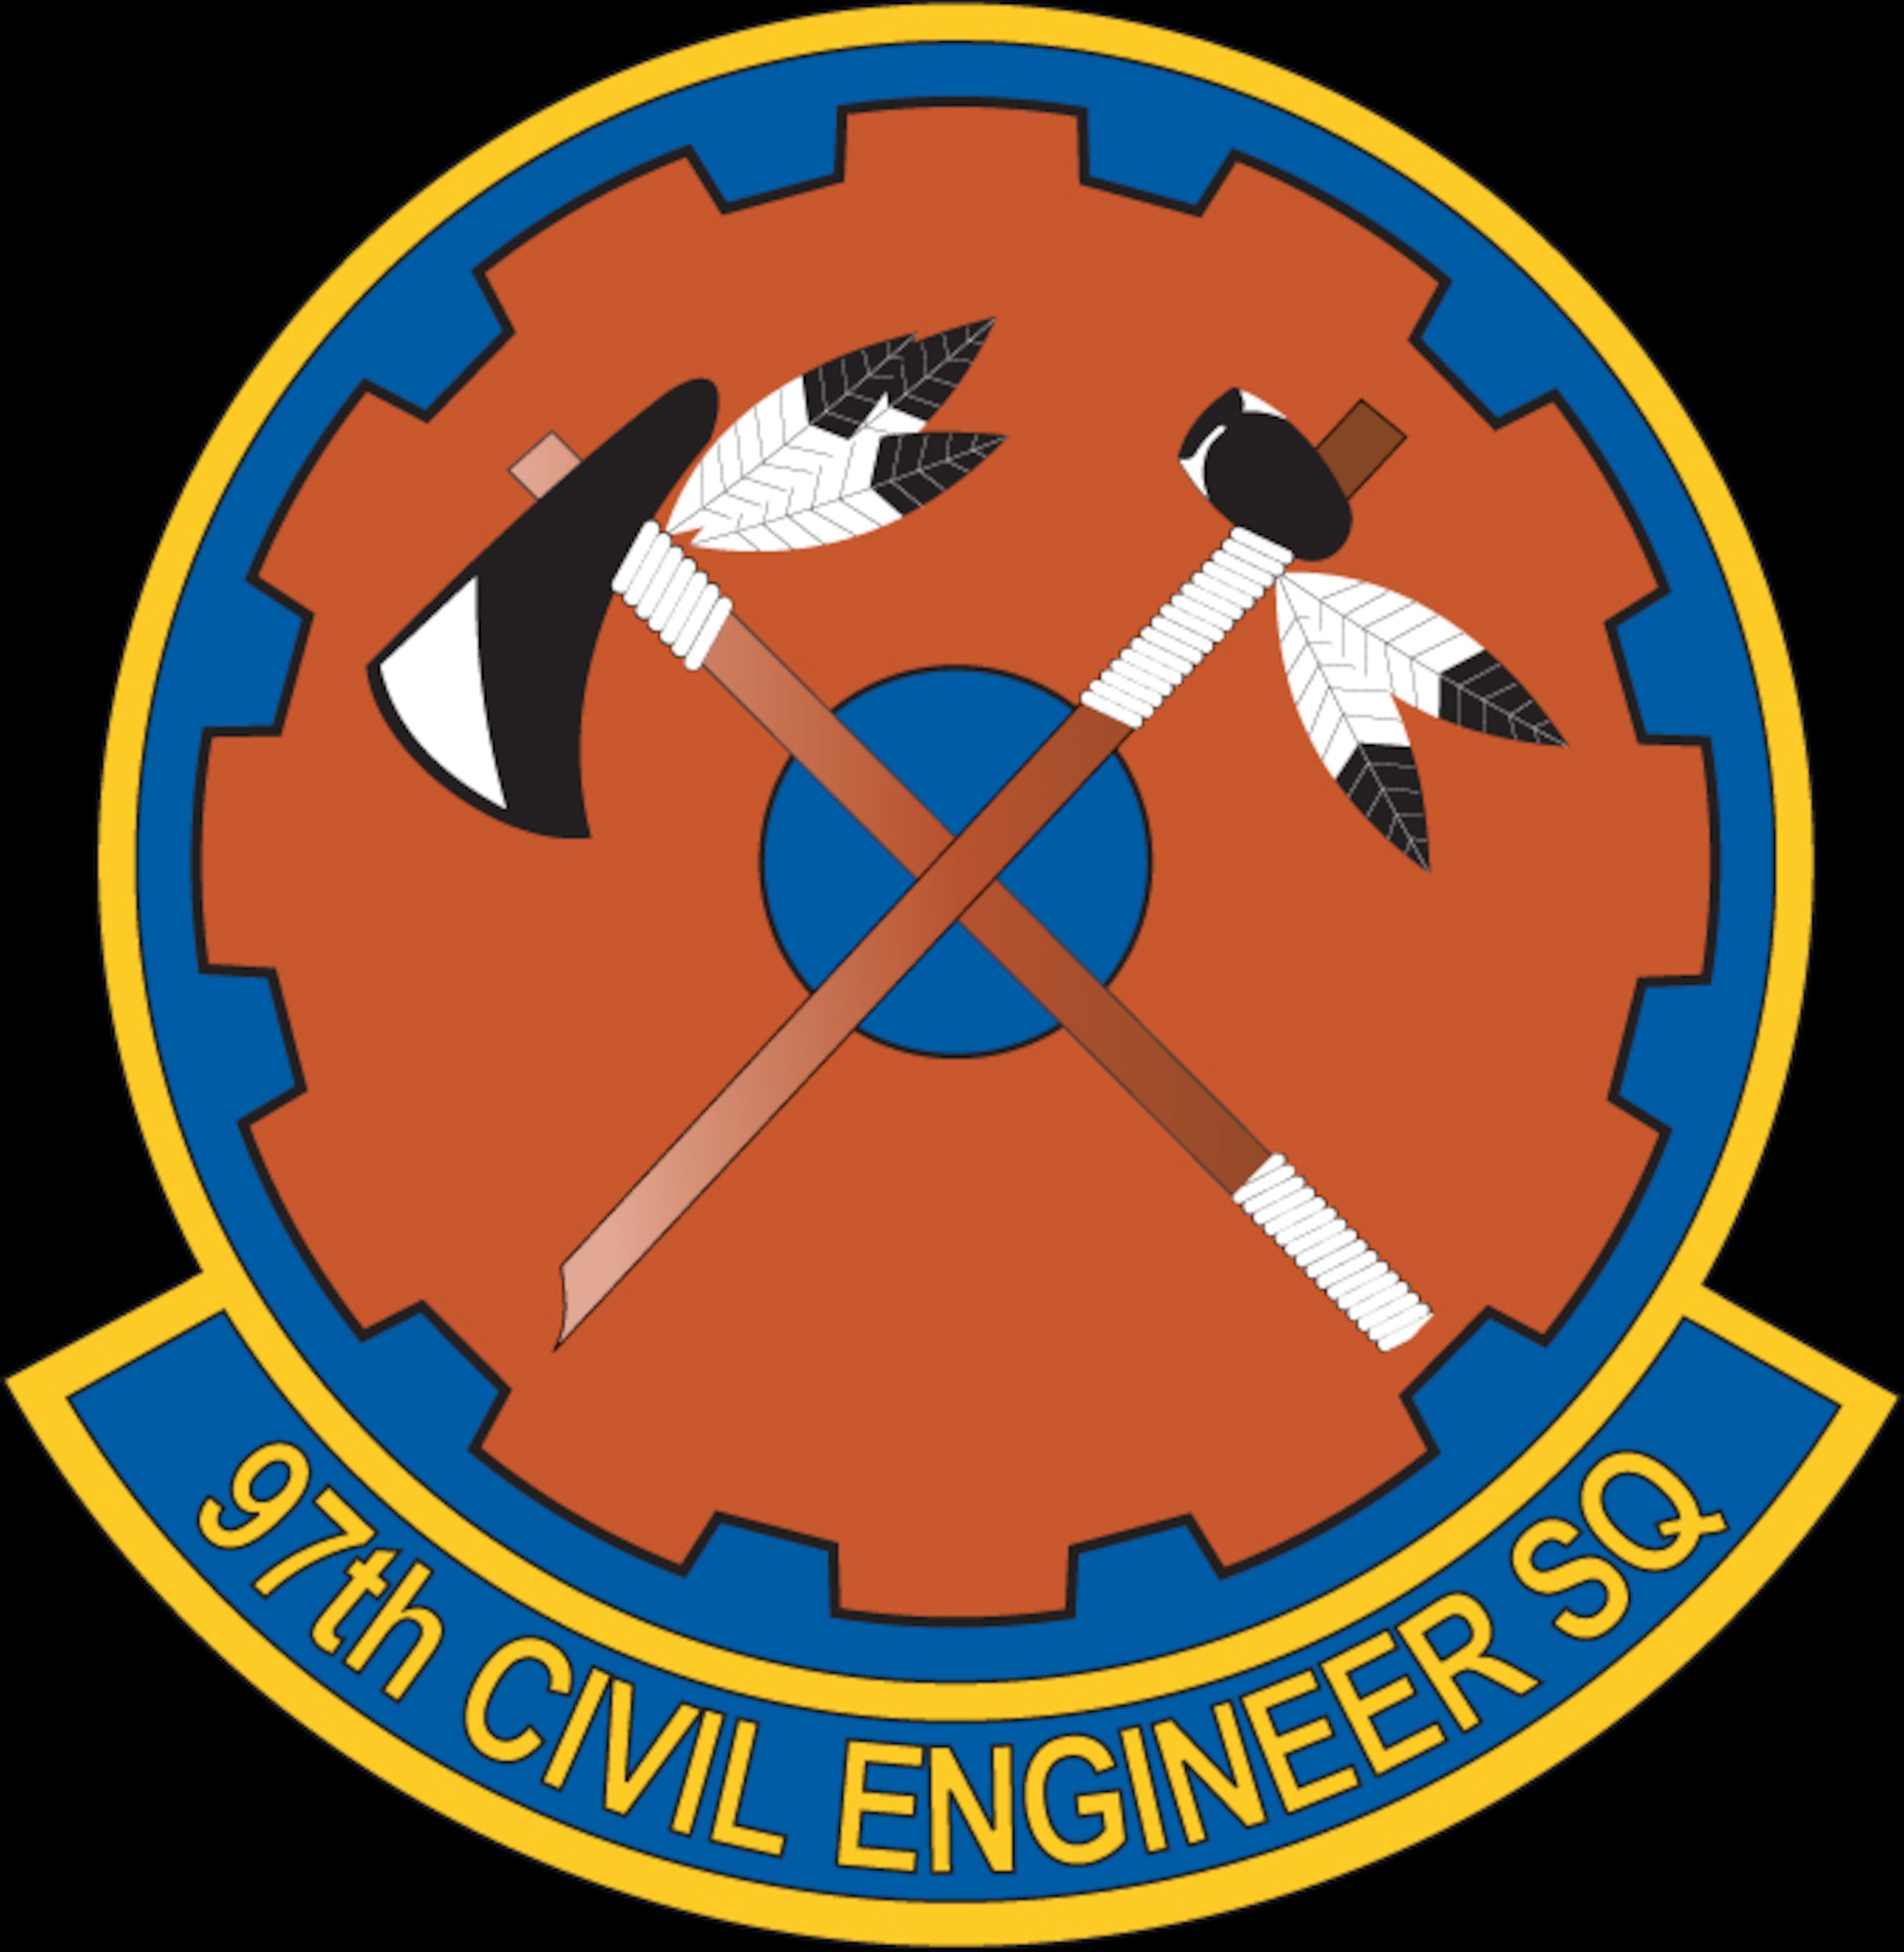 97th Civil Engineer Squadron